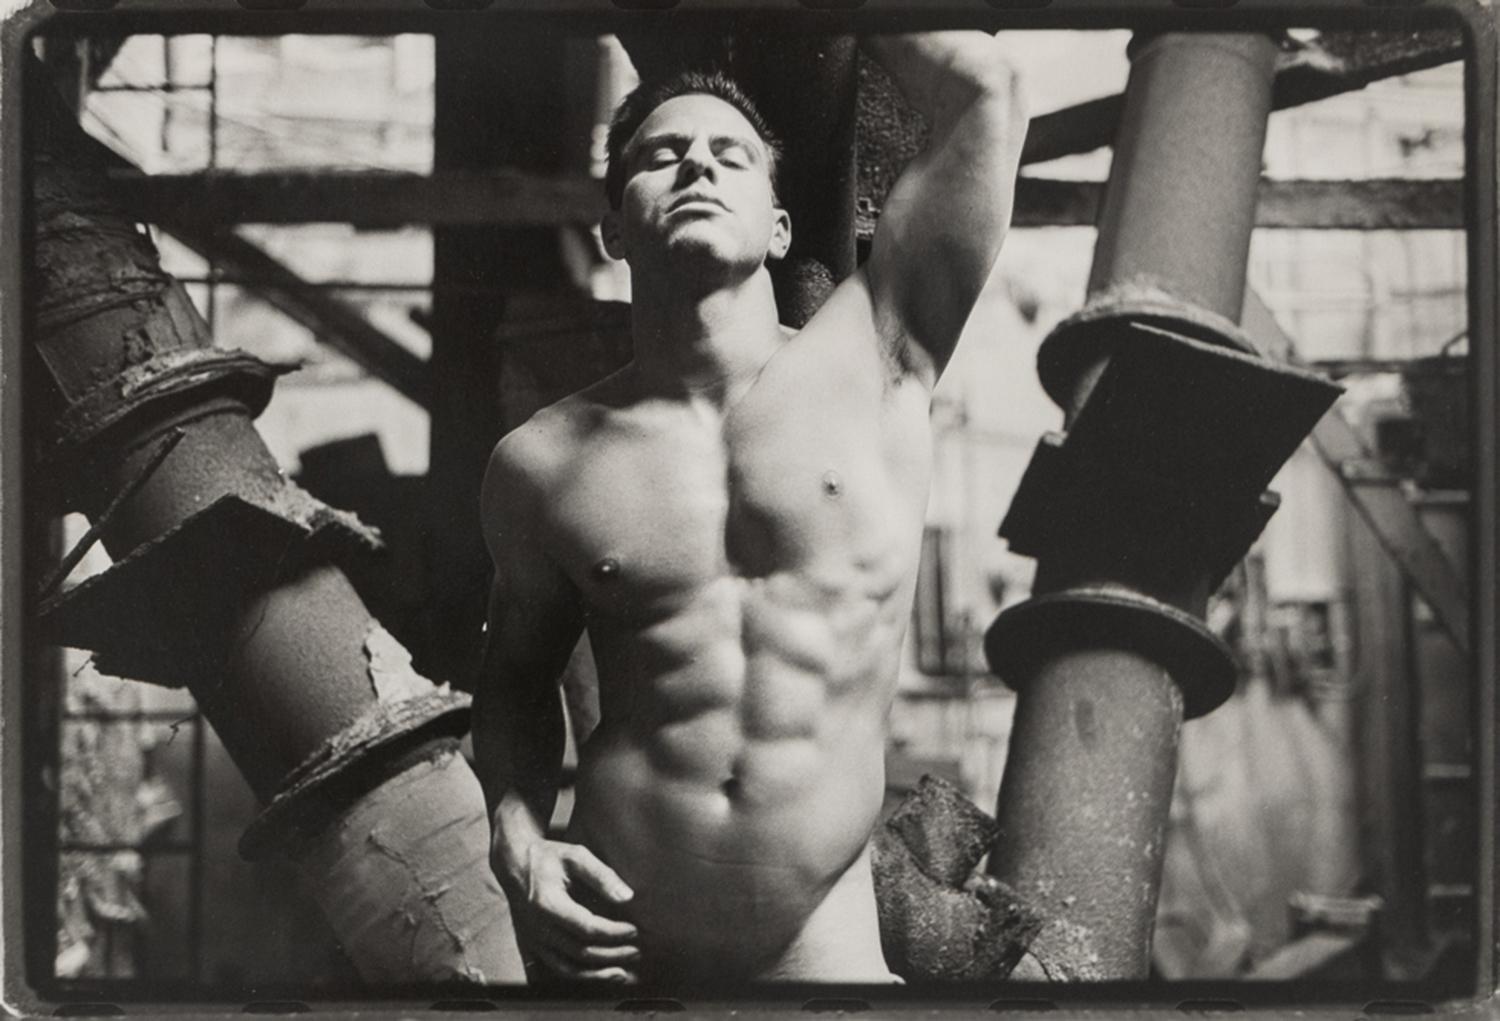 Bill Costa Nude Photograph - The Crucifix